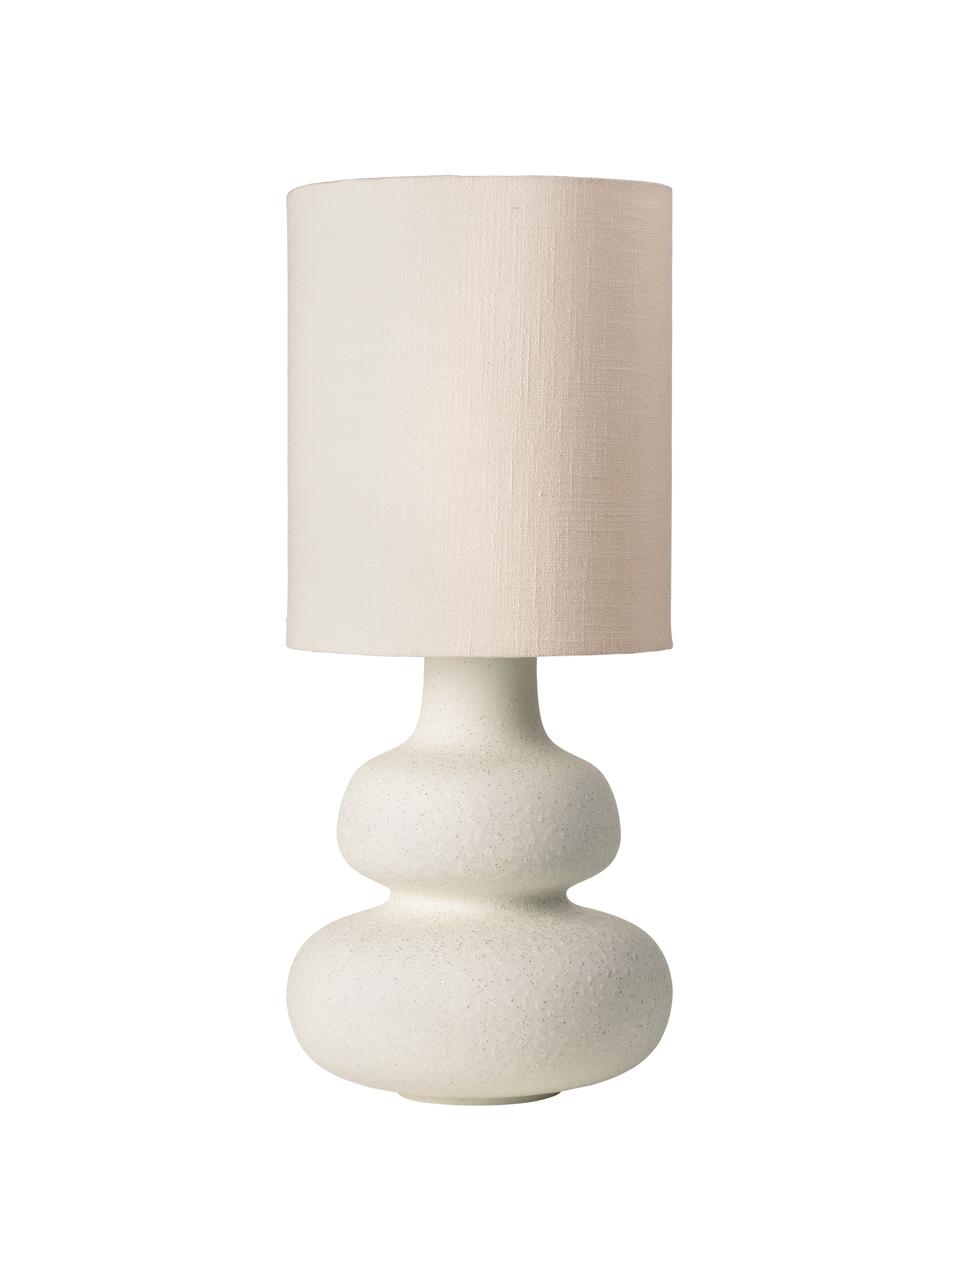 Lampada da tavolo grande in ceramica Dandie, Paralume: tessuto, Base della lampada: ceramica, Beige, Ø 26 x Alt. 60 cm